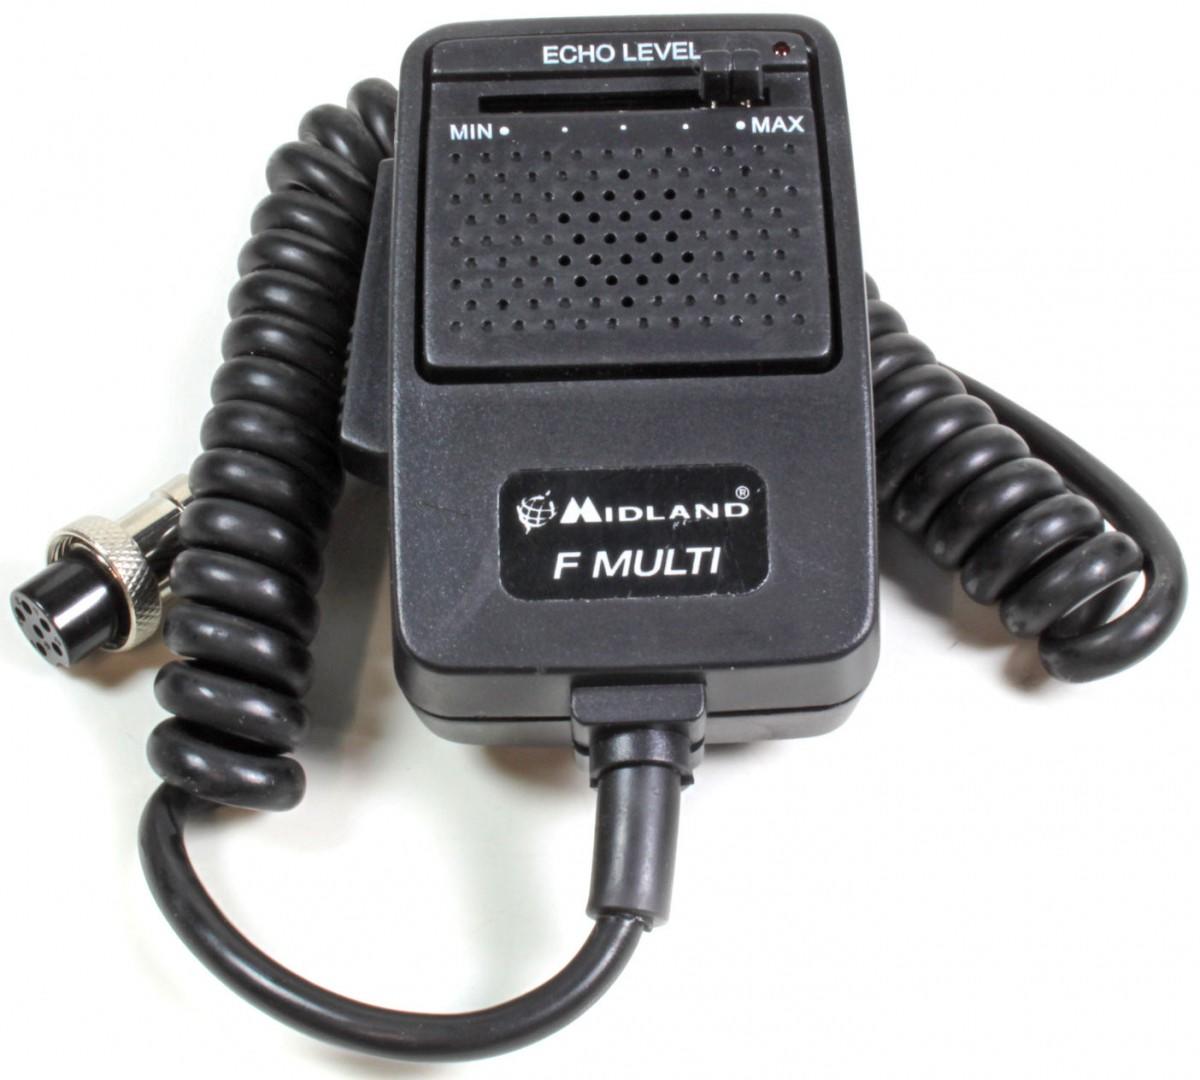 Midland F-MULTI Handheld Microphone